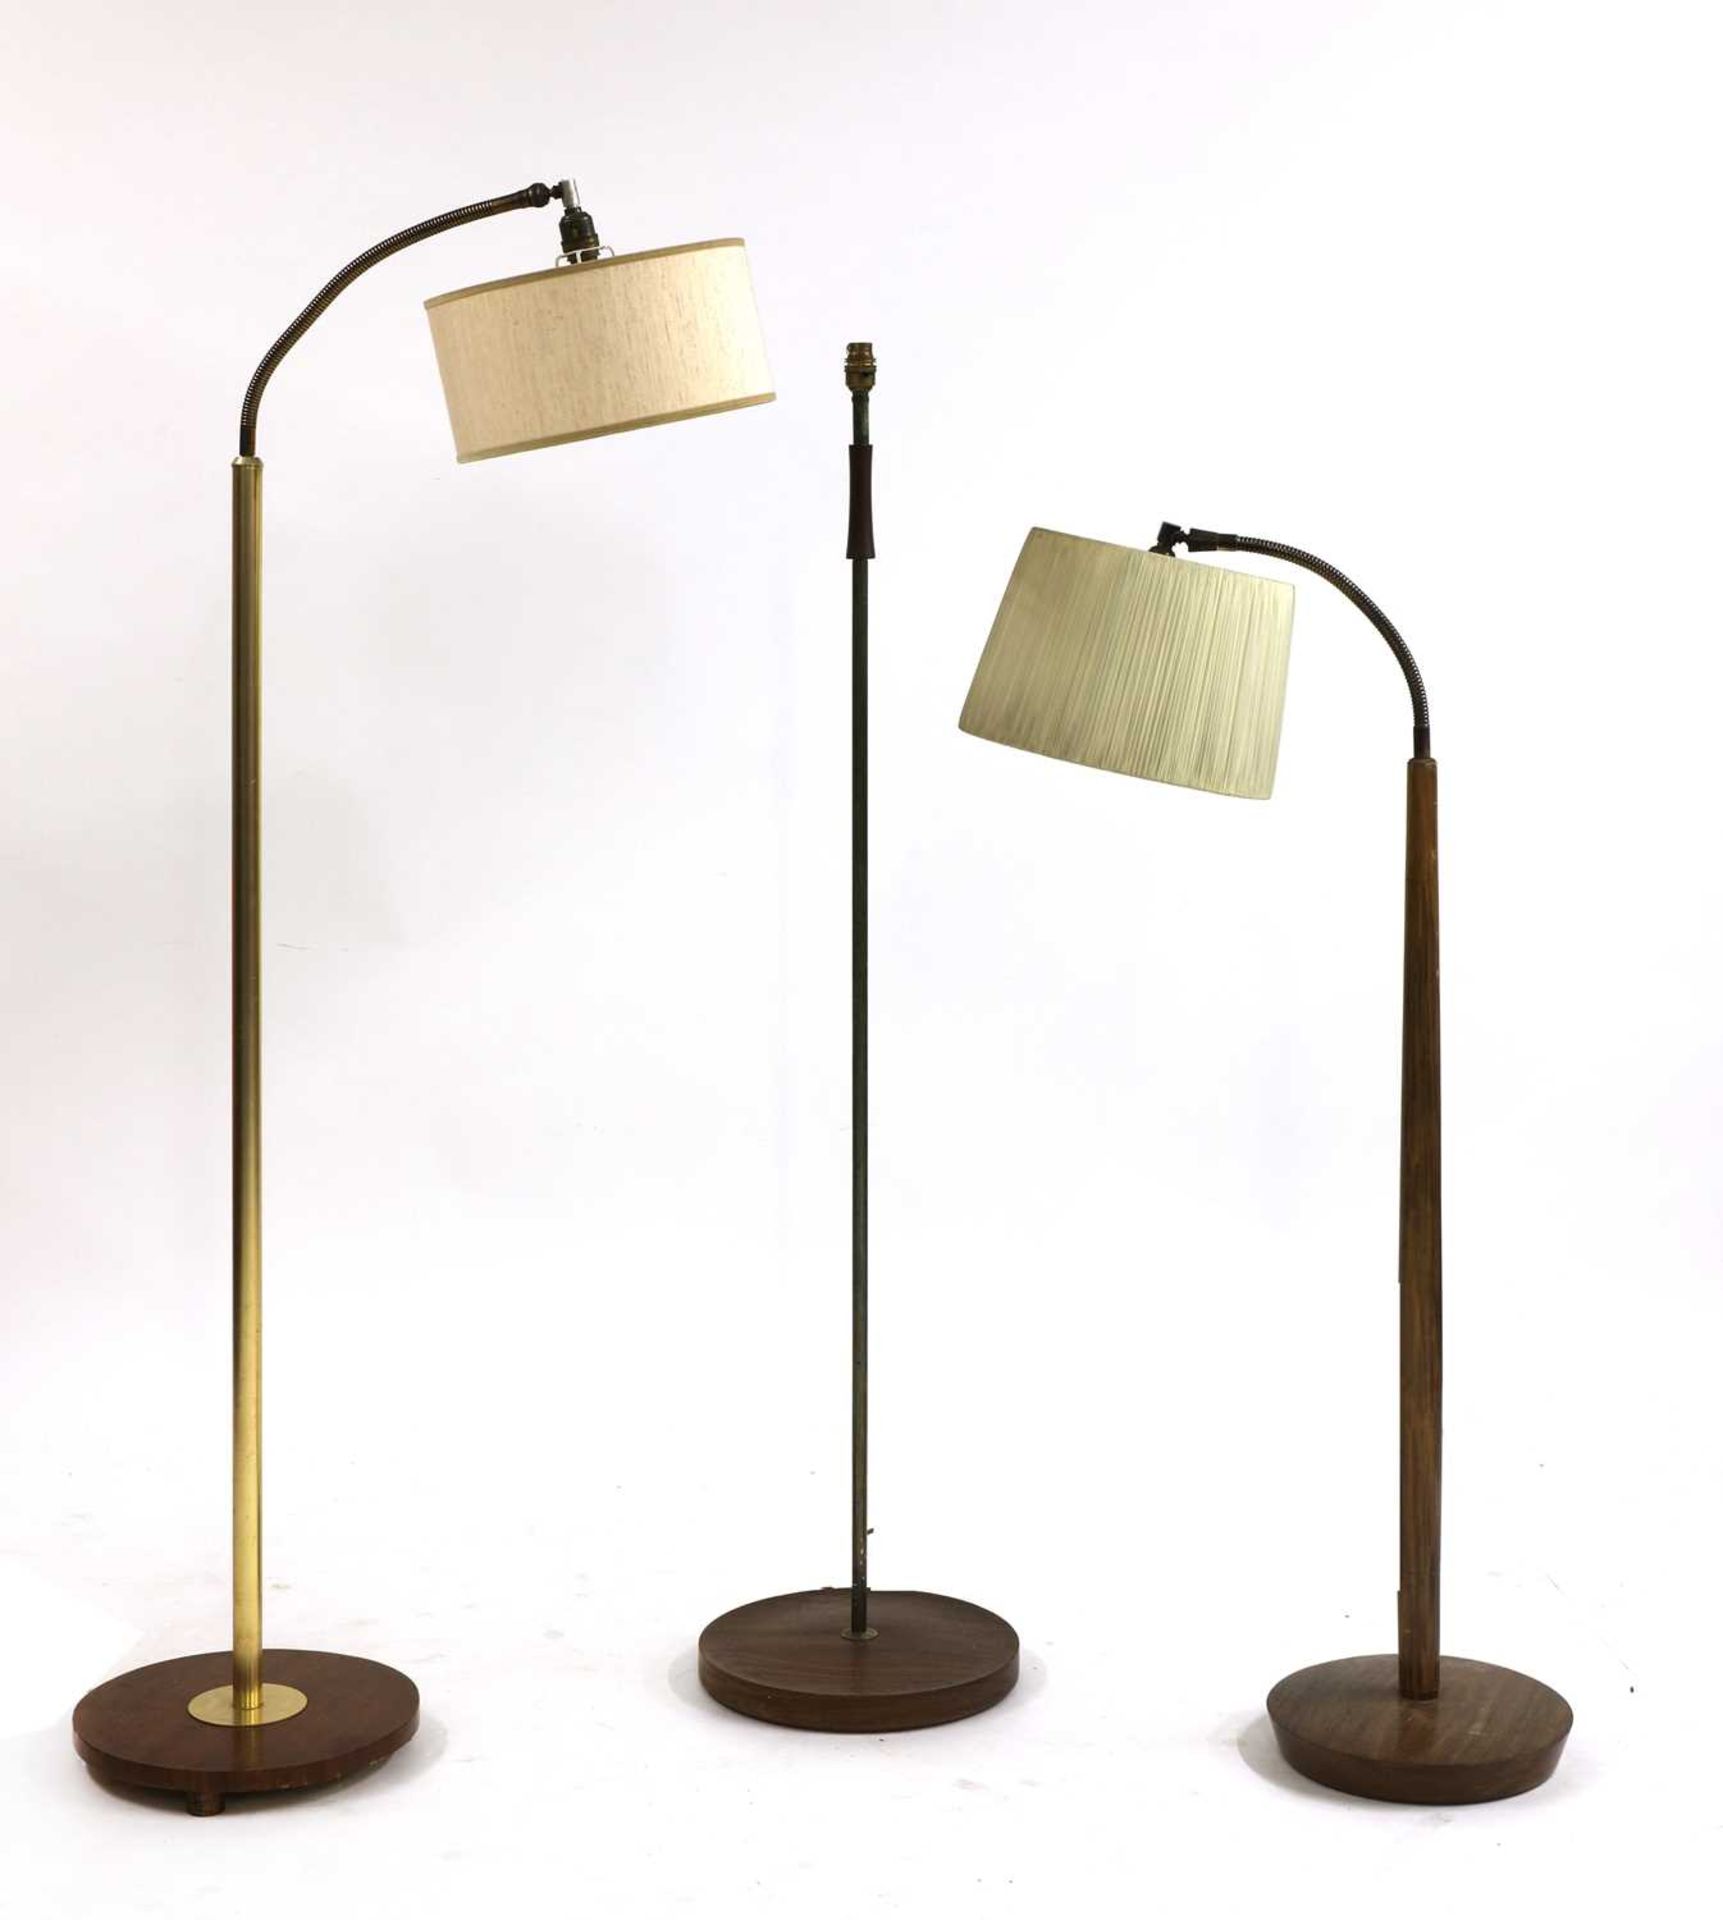 Three standard lamps,